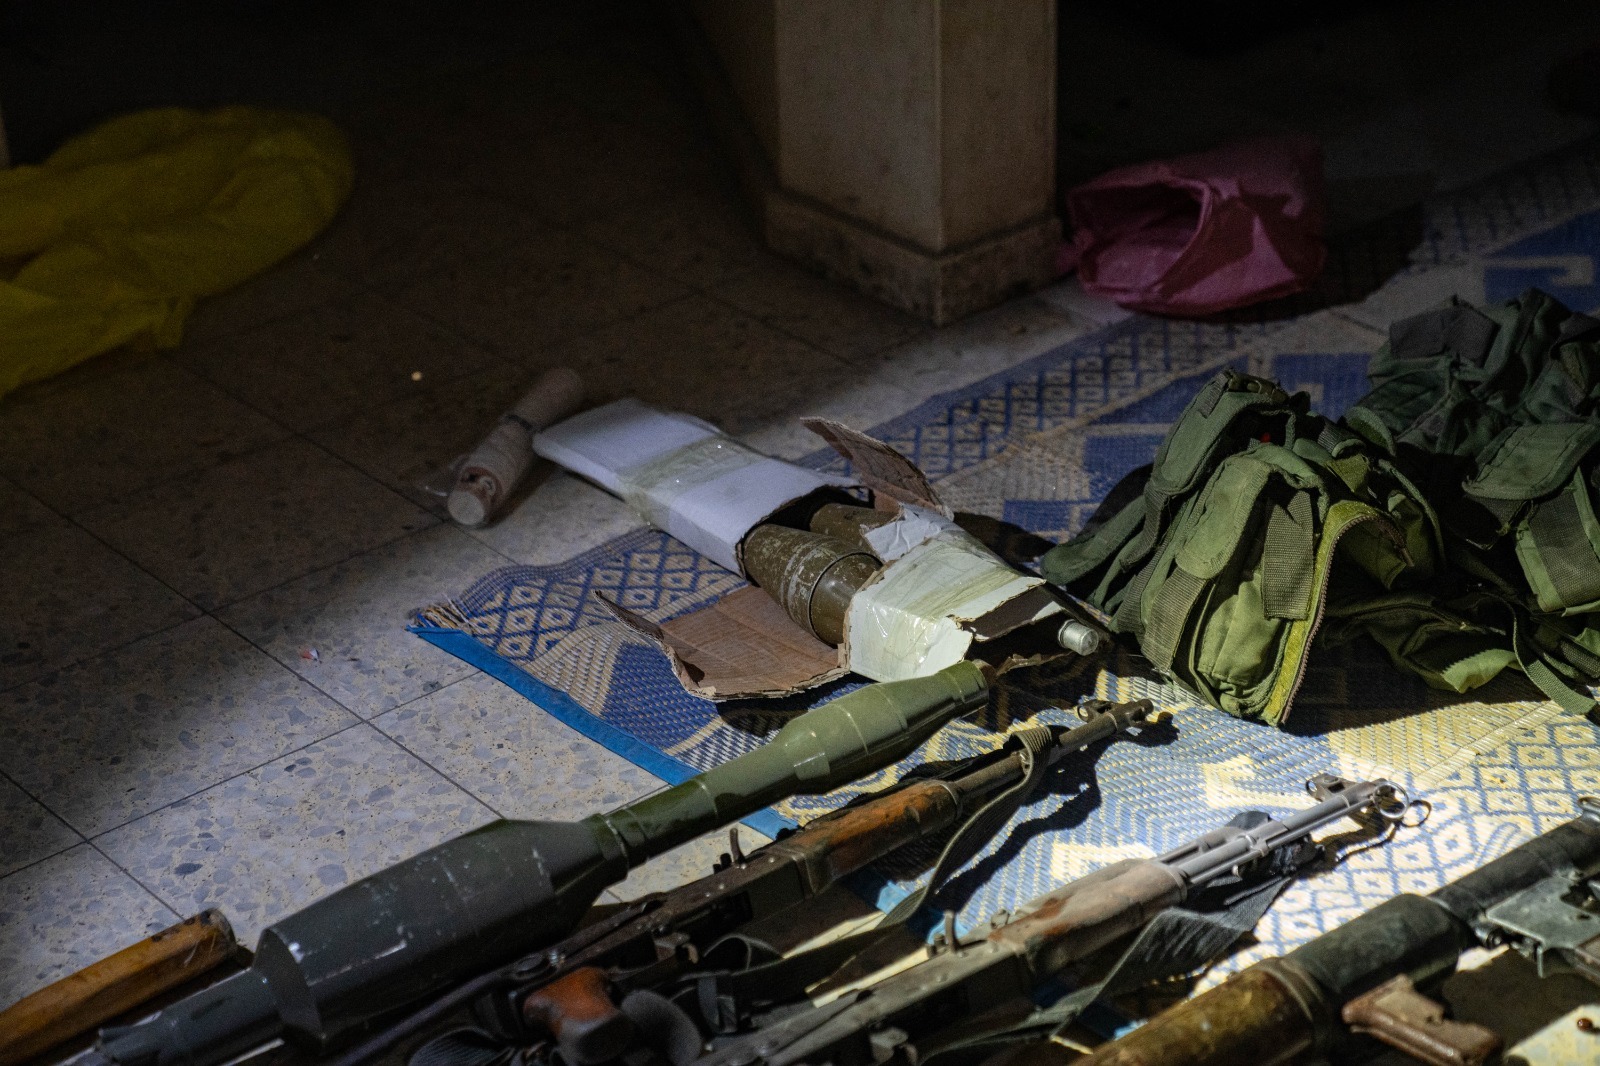 Hamas weapons found in Gaza home IDF photo